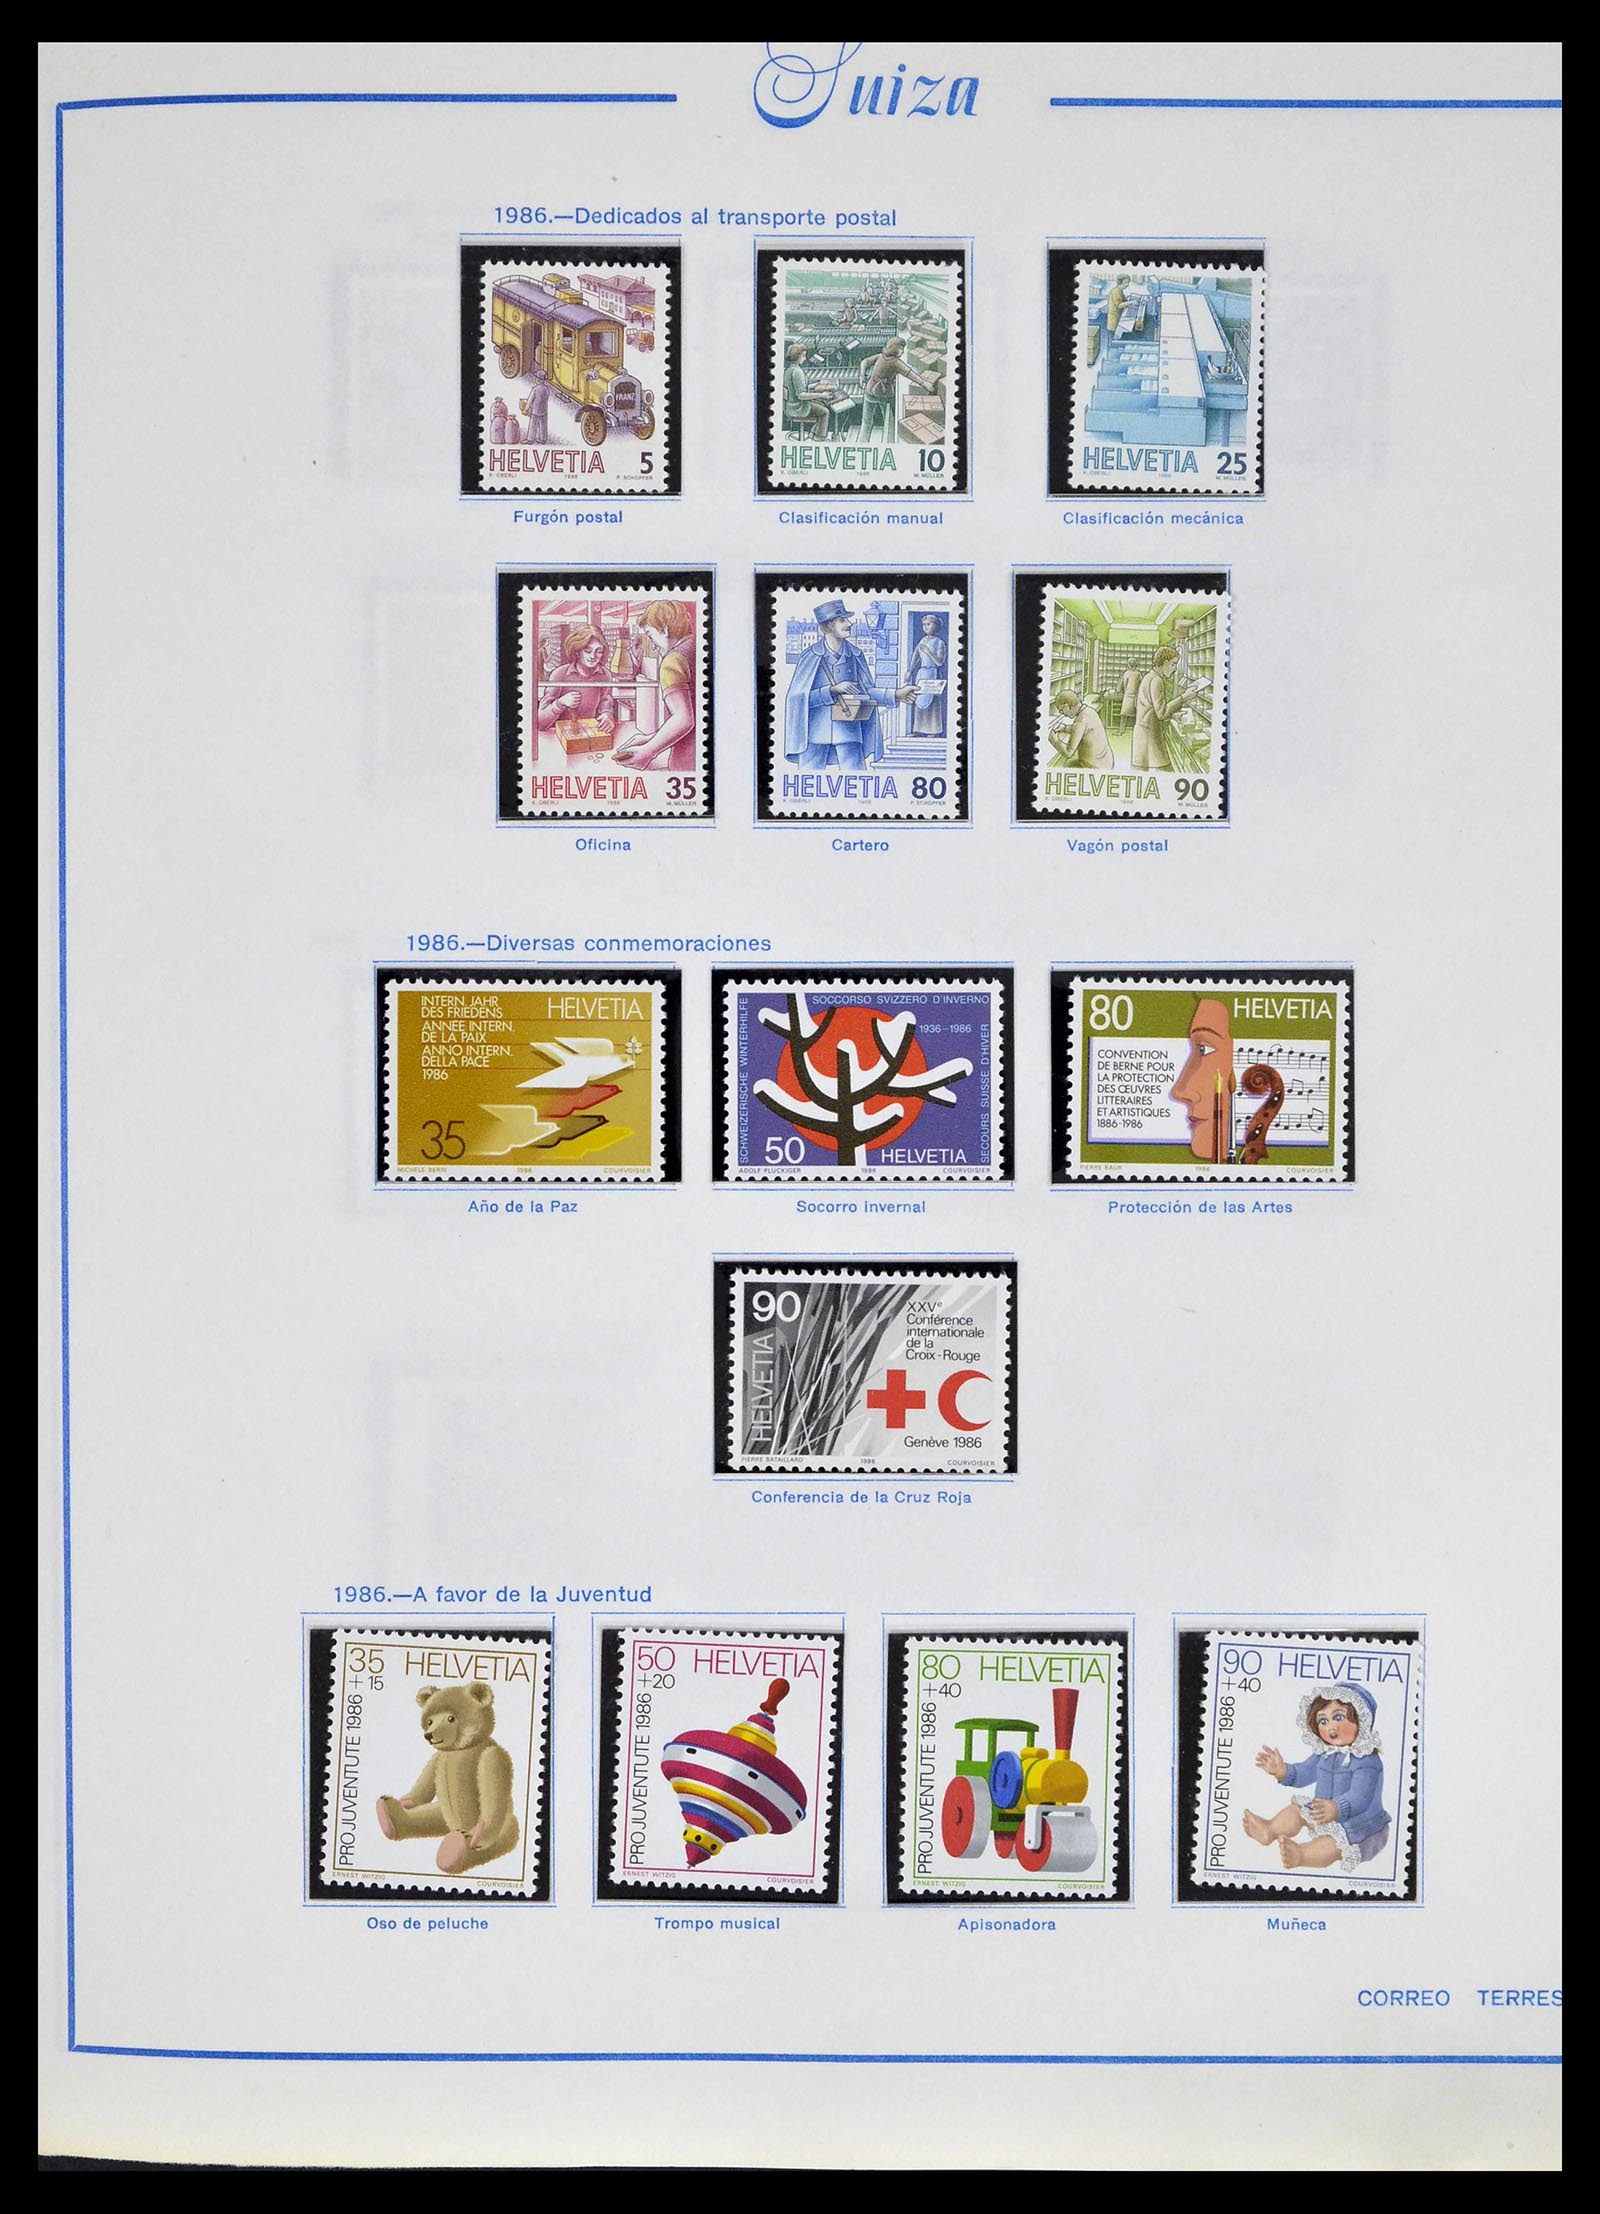 39217 0084 - Stamp collection 39217 Switzerland 1850-1986.